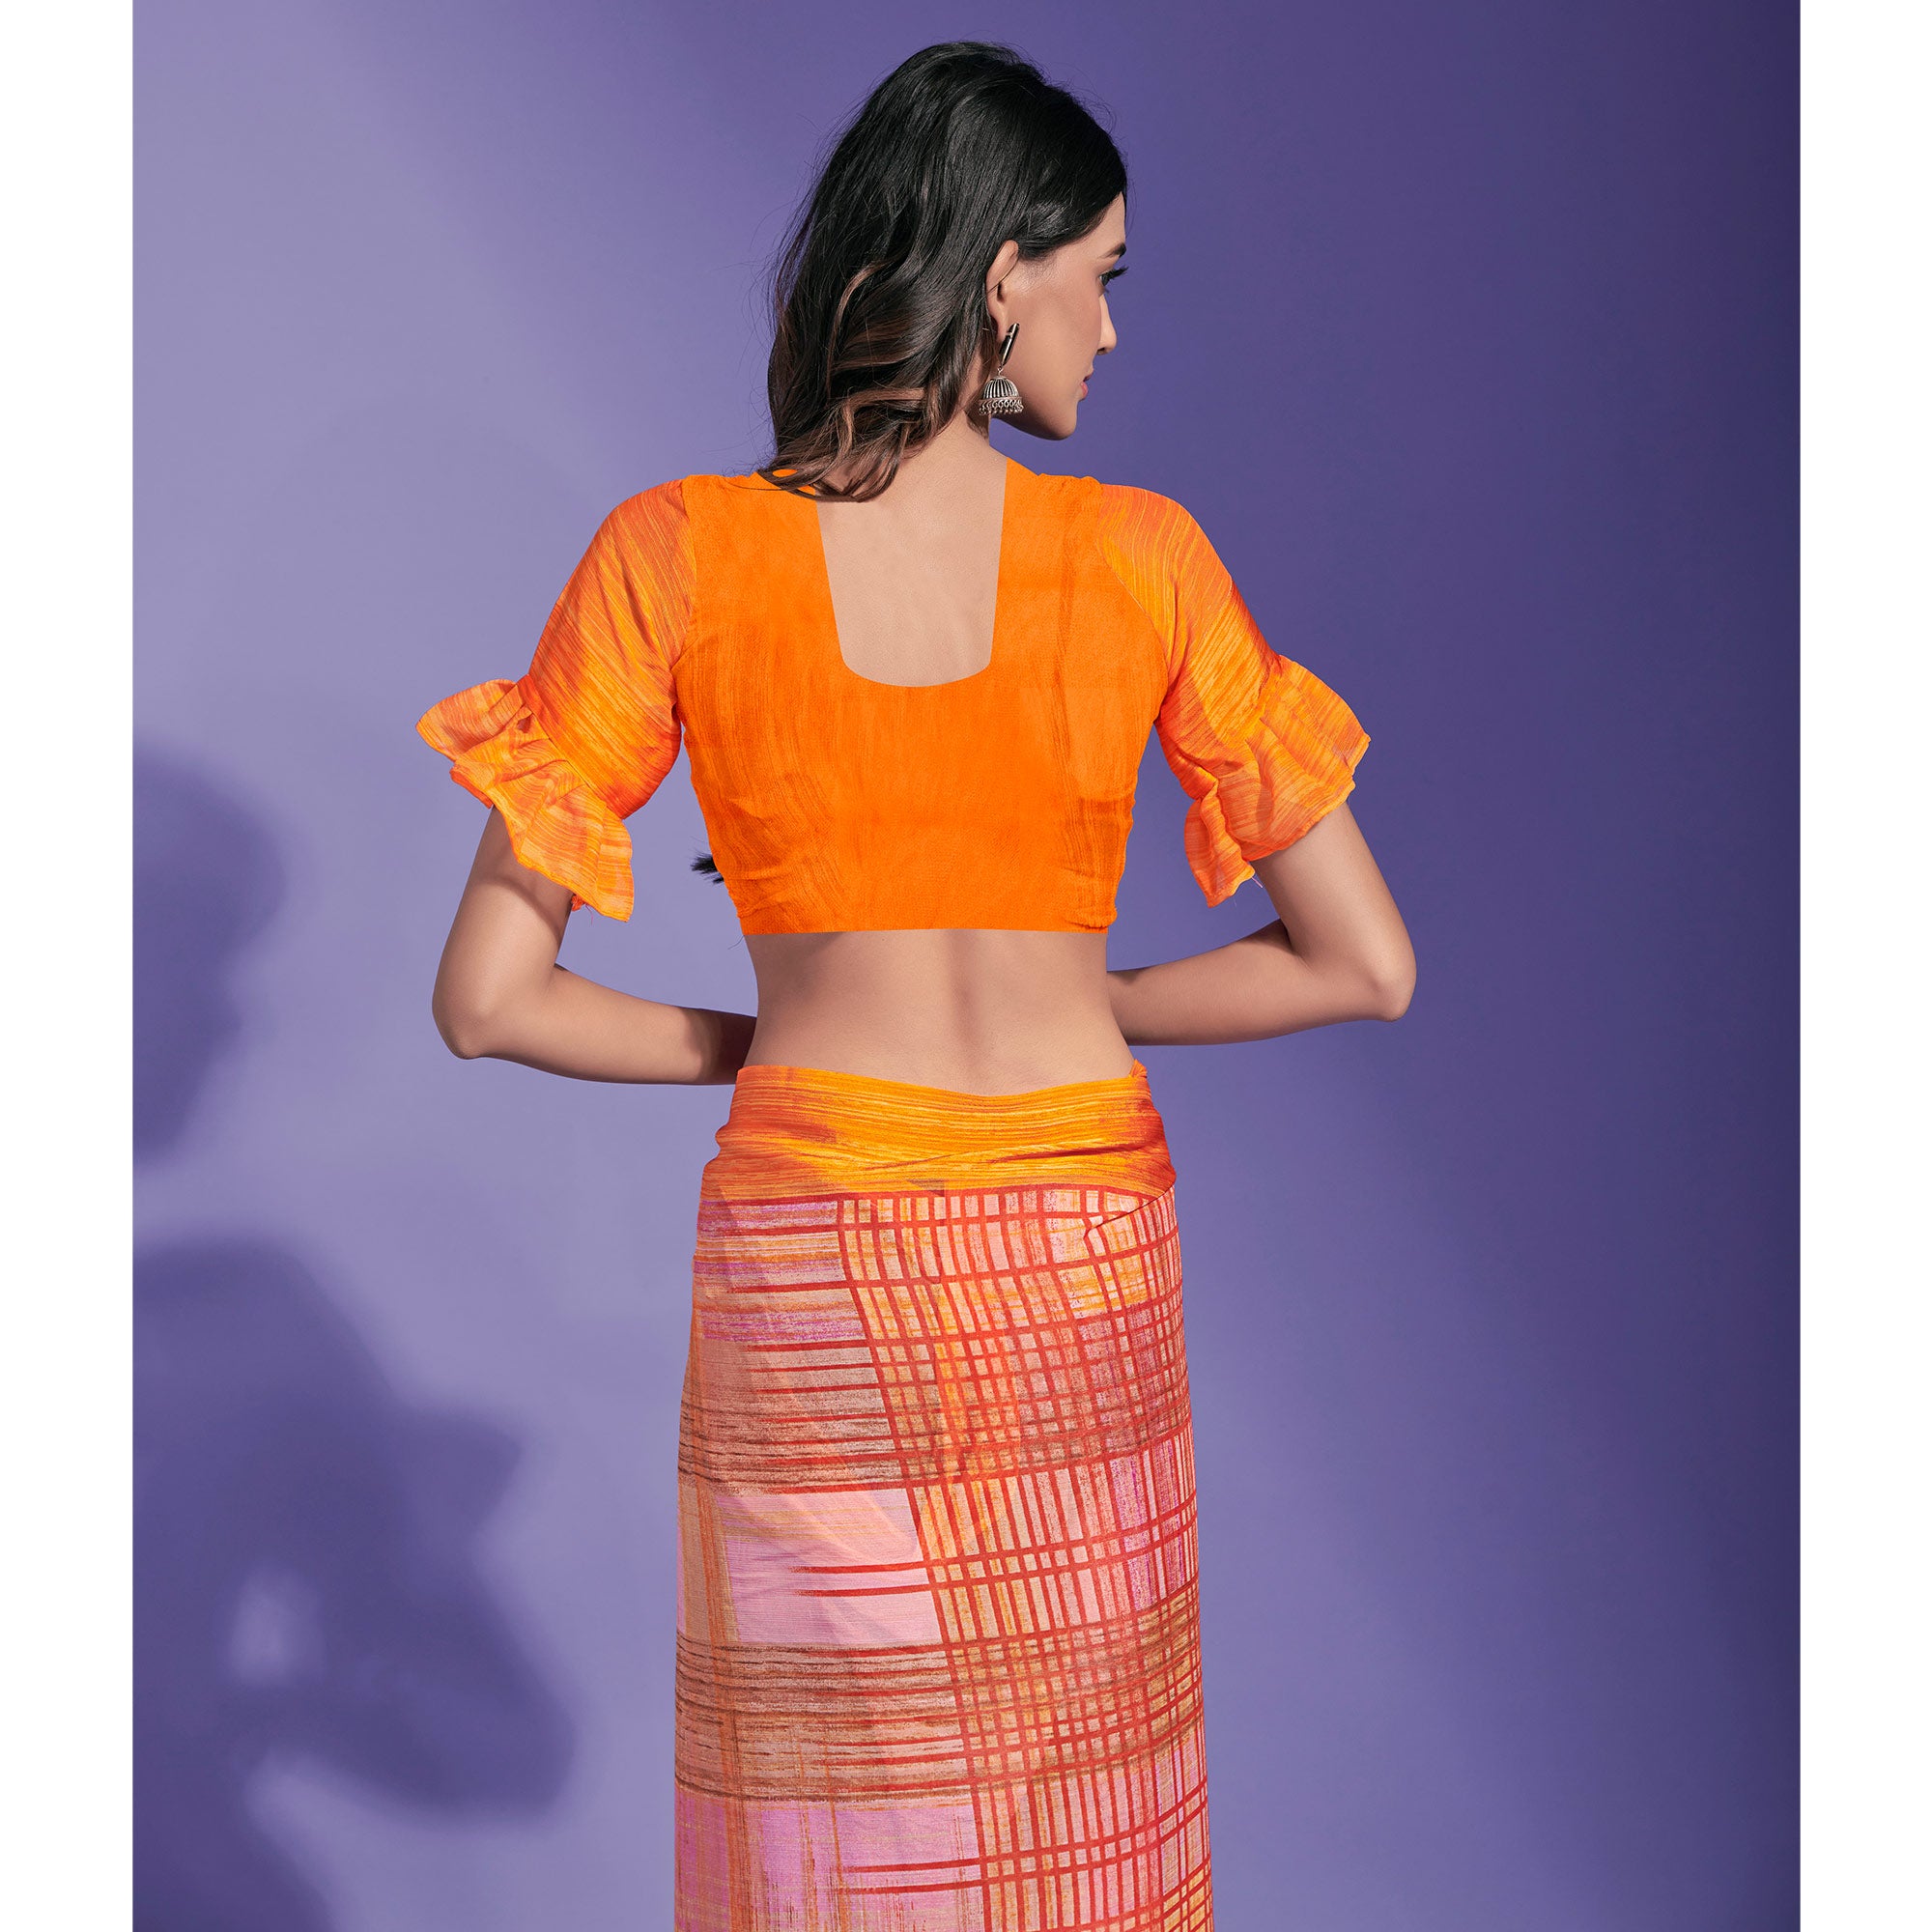 Orange Printed Chiffon Saree